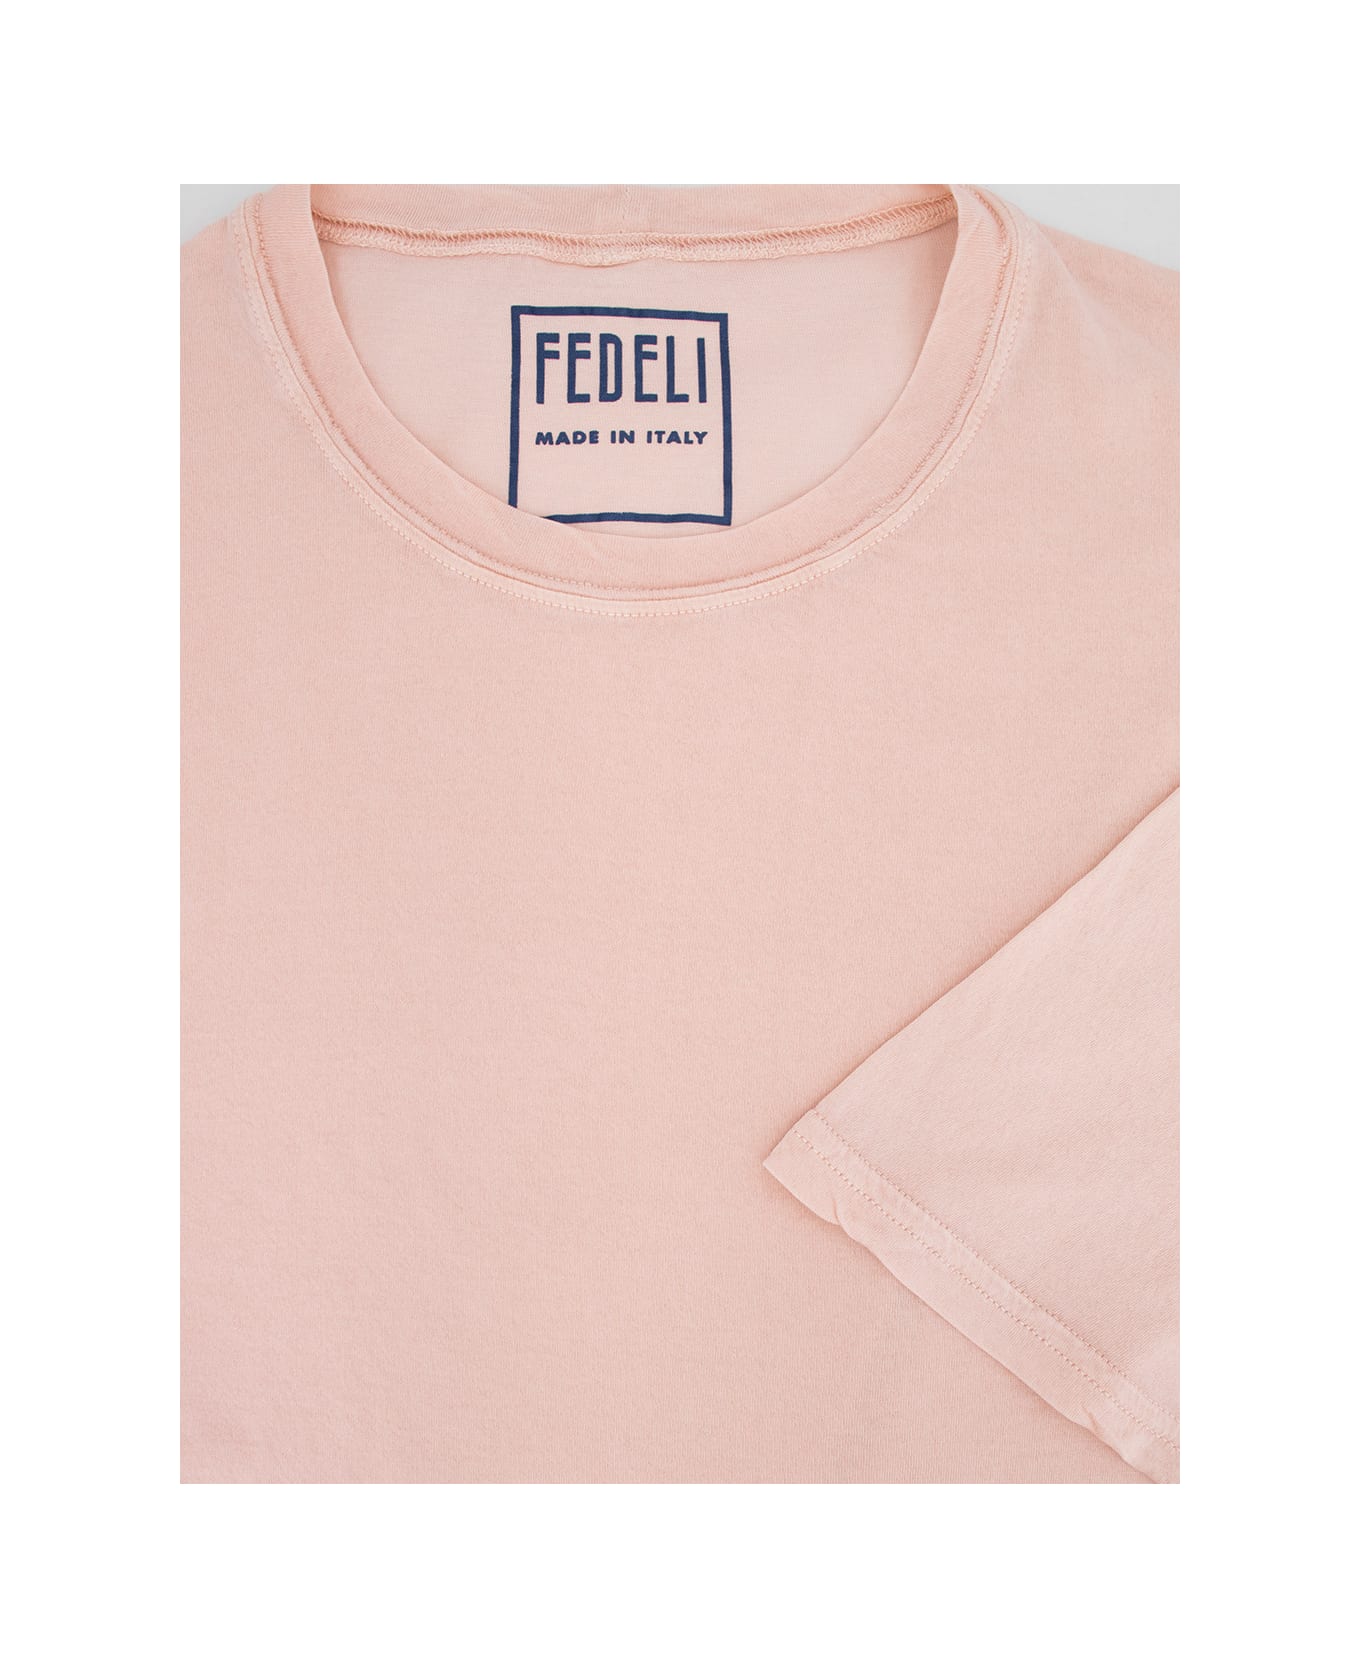 Fedeli T-shirt - 166